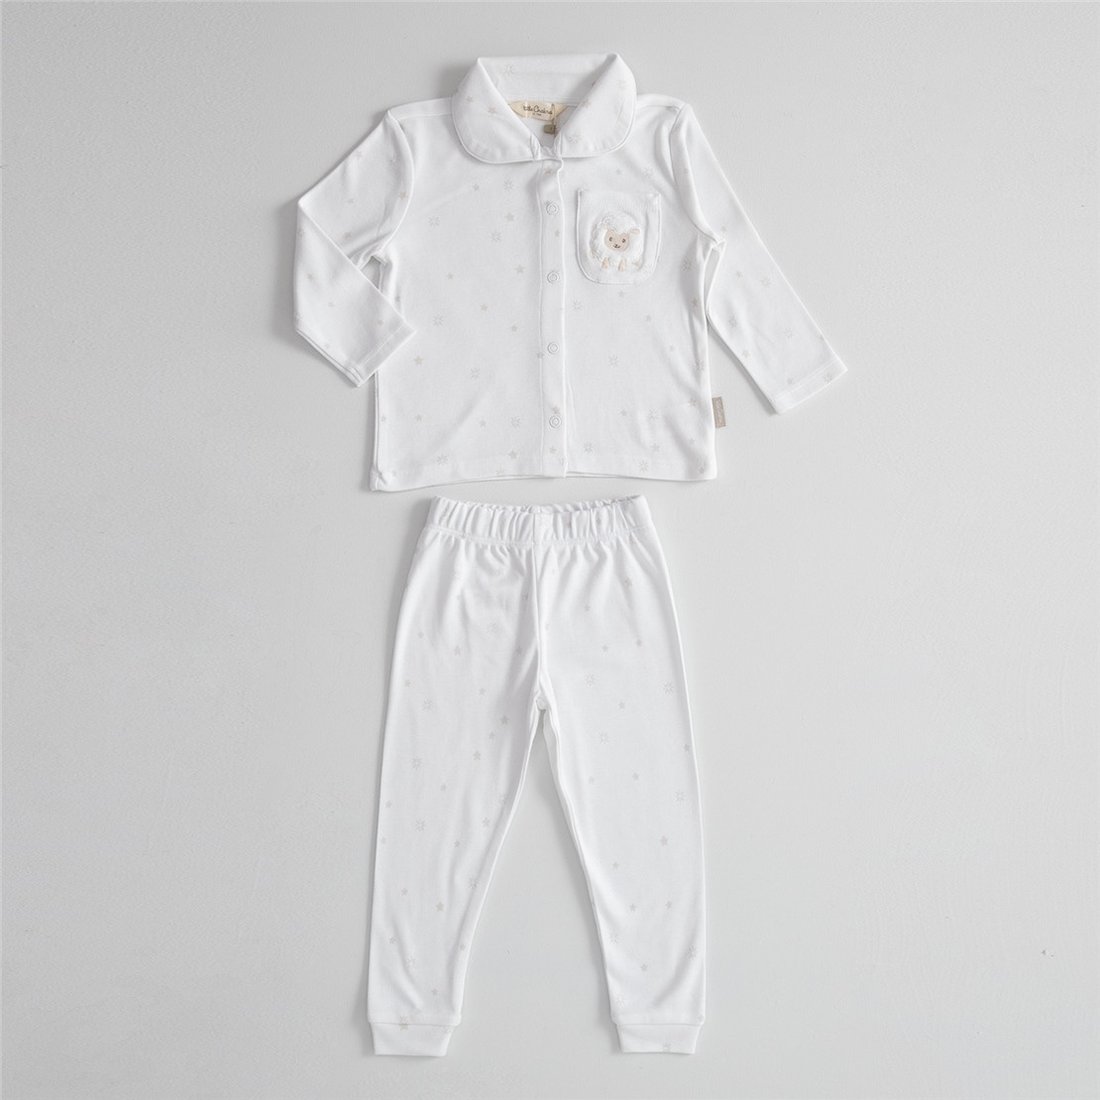 Детская пижама LAMB от 6 мес до 2 лет, роазмер 92-98, белая